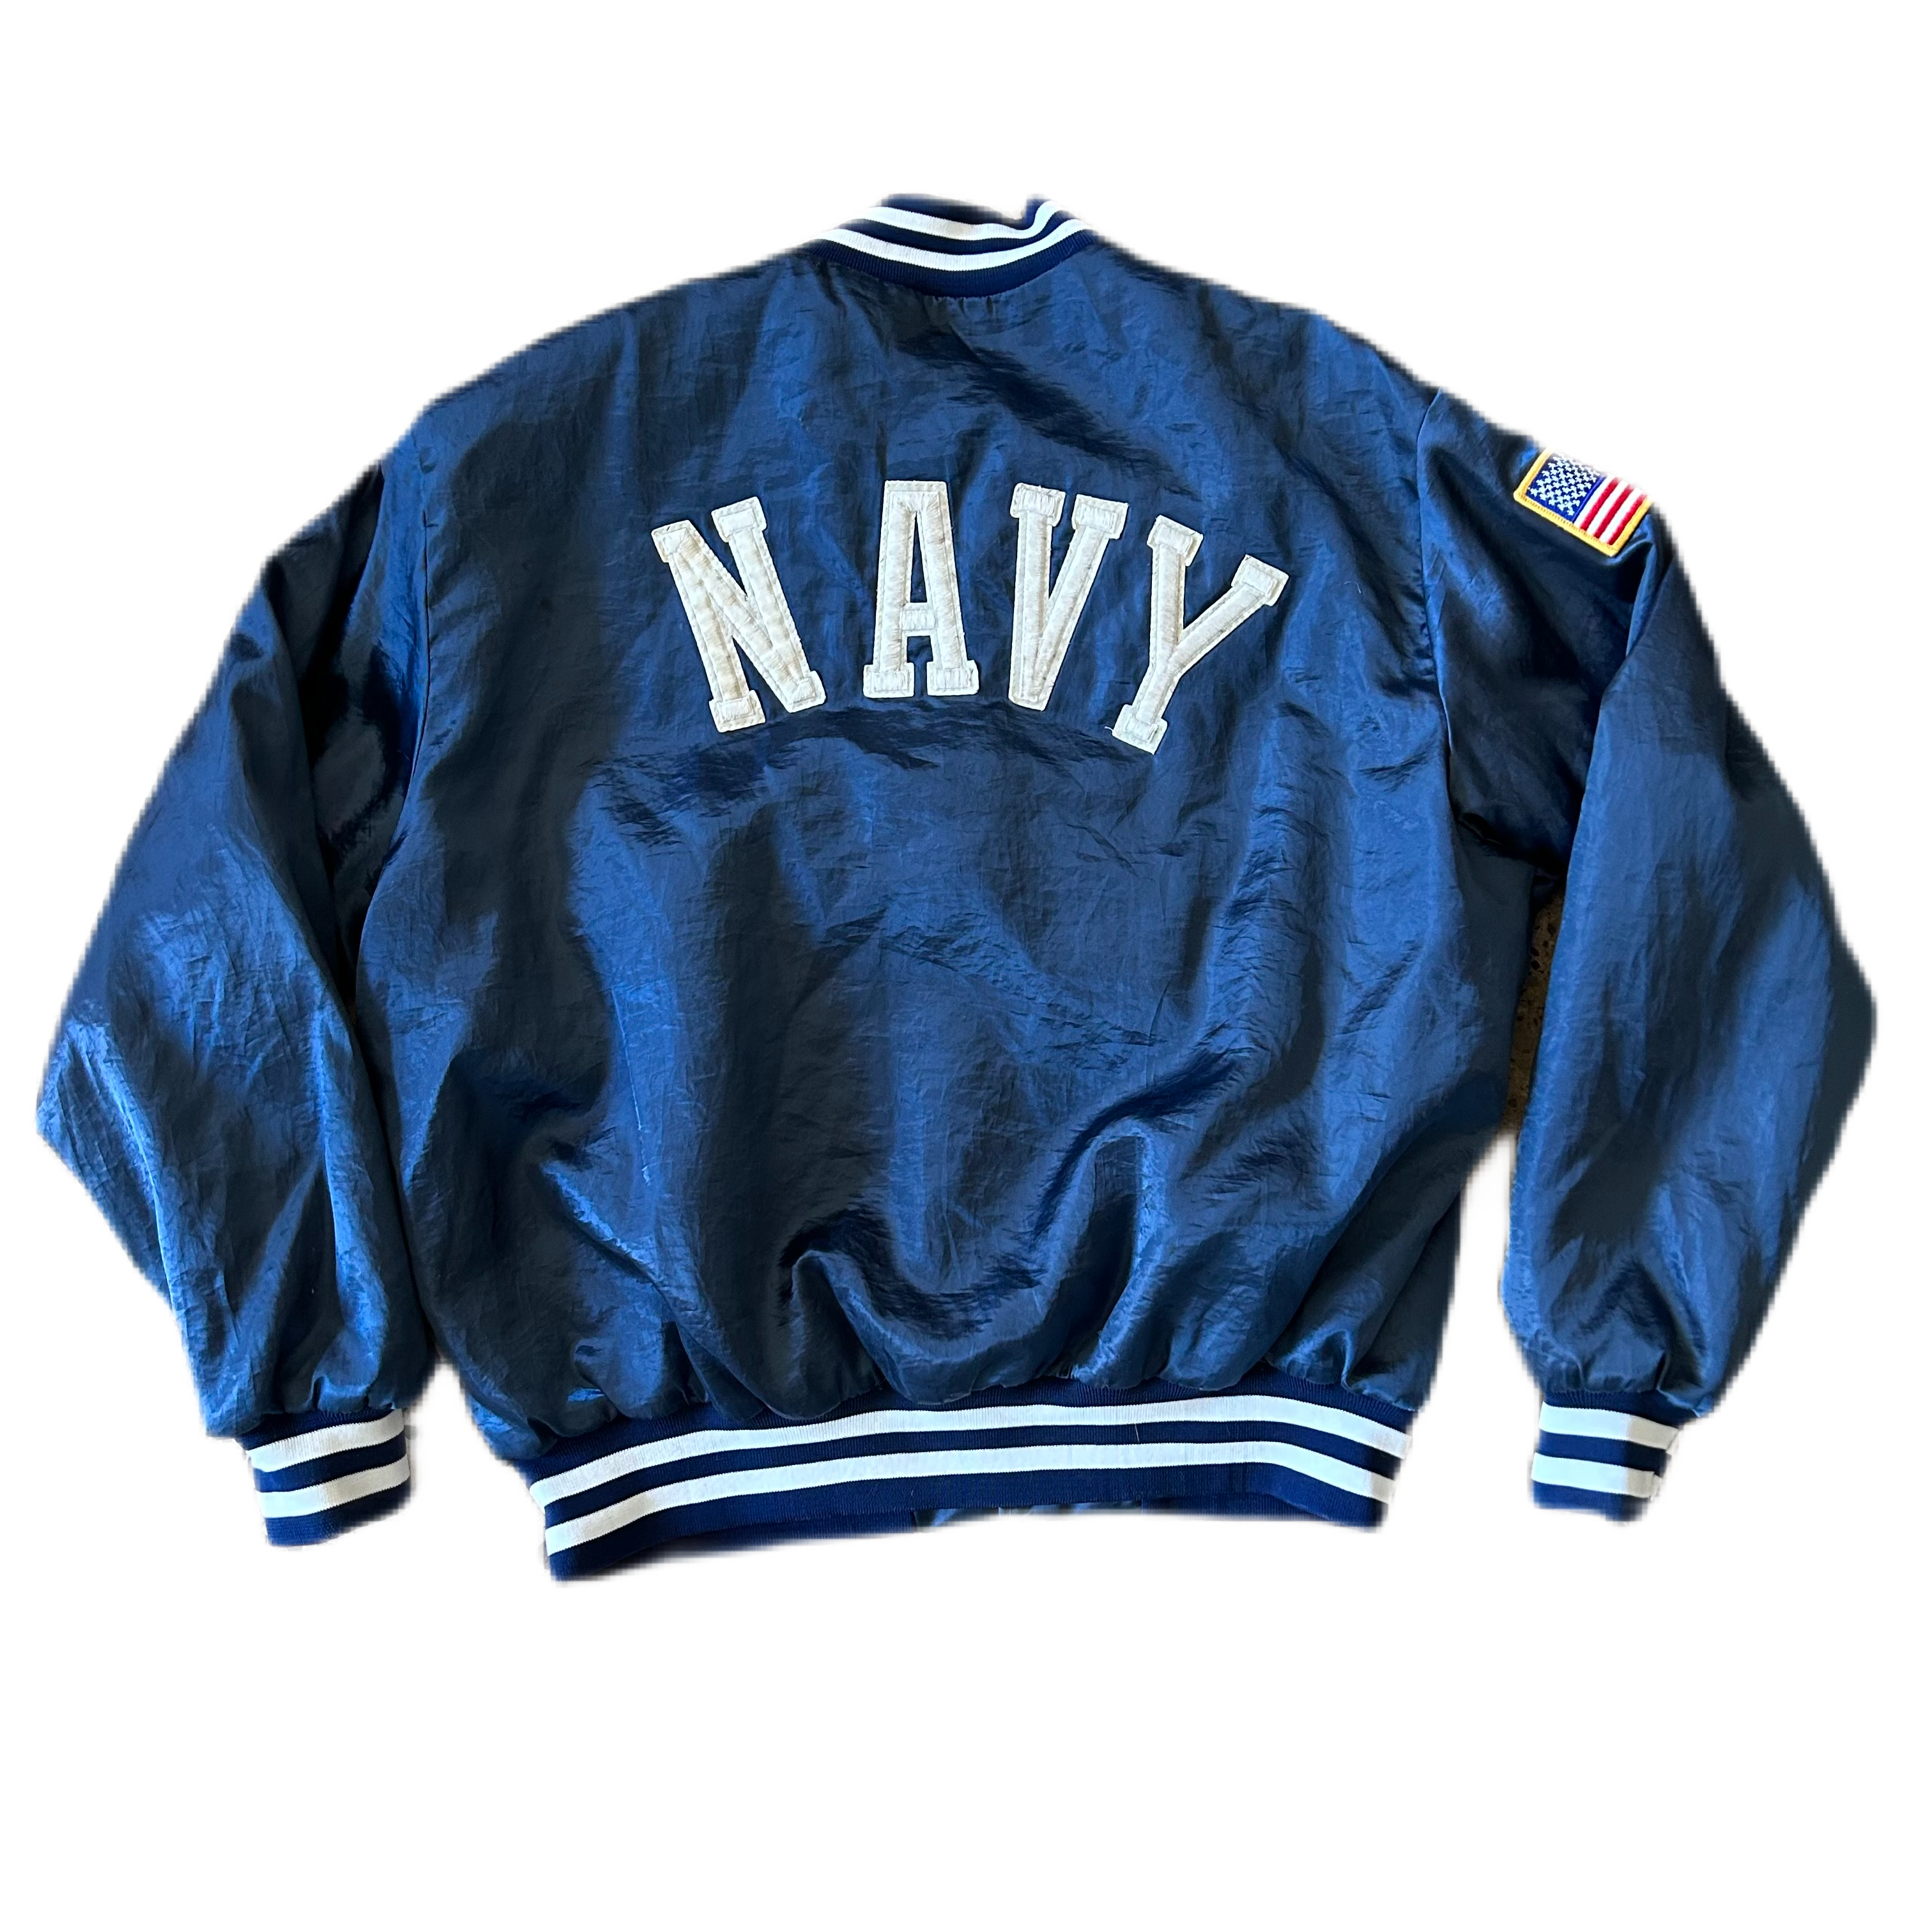 Vintage 1990s NAVY Jacket